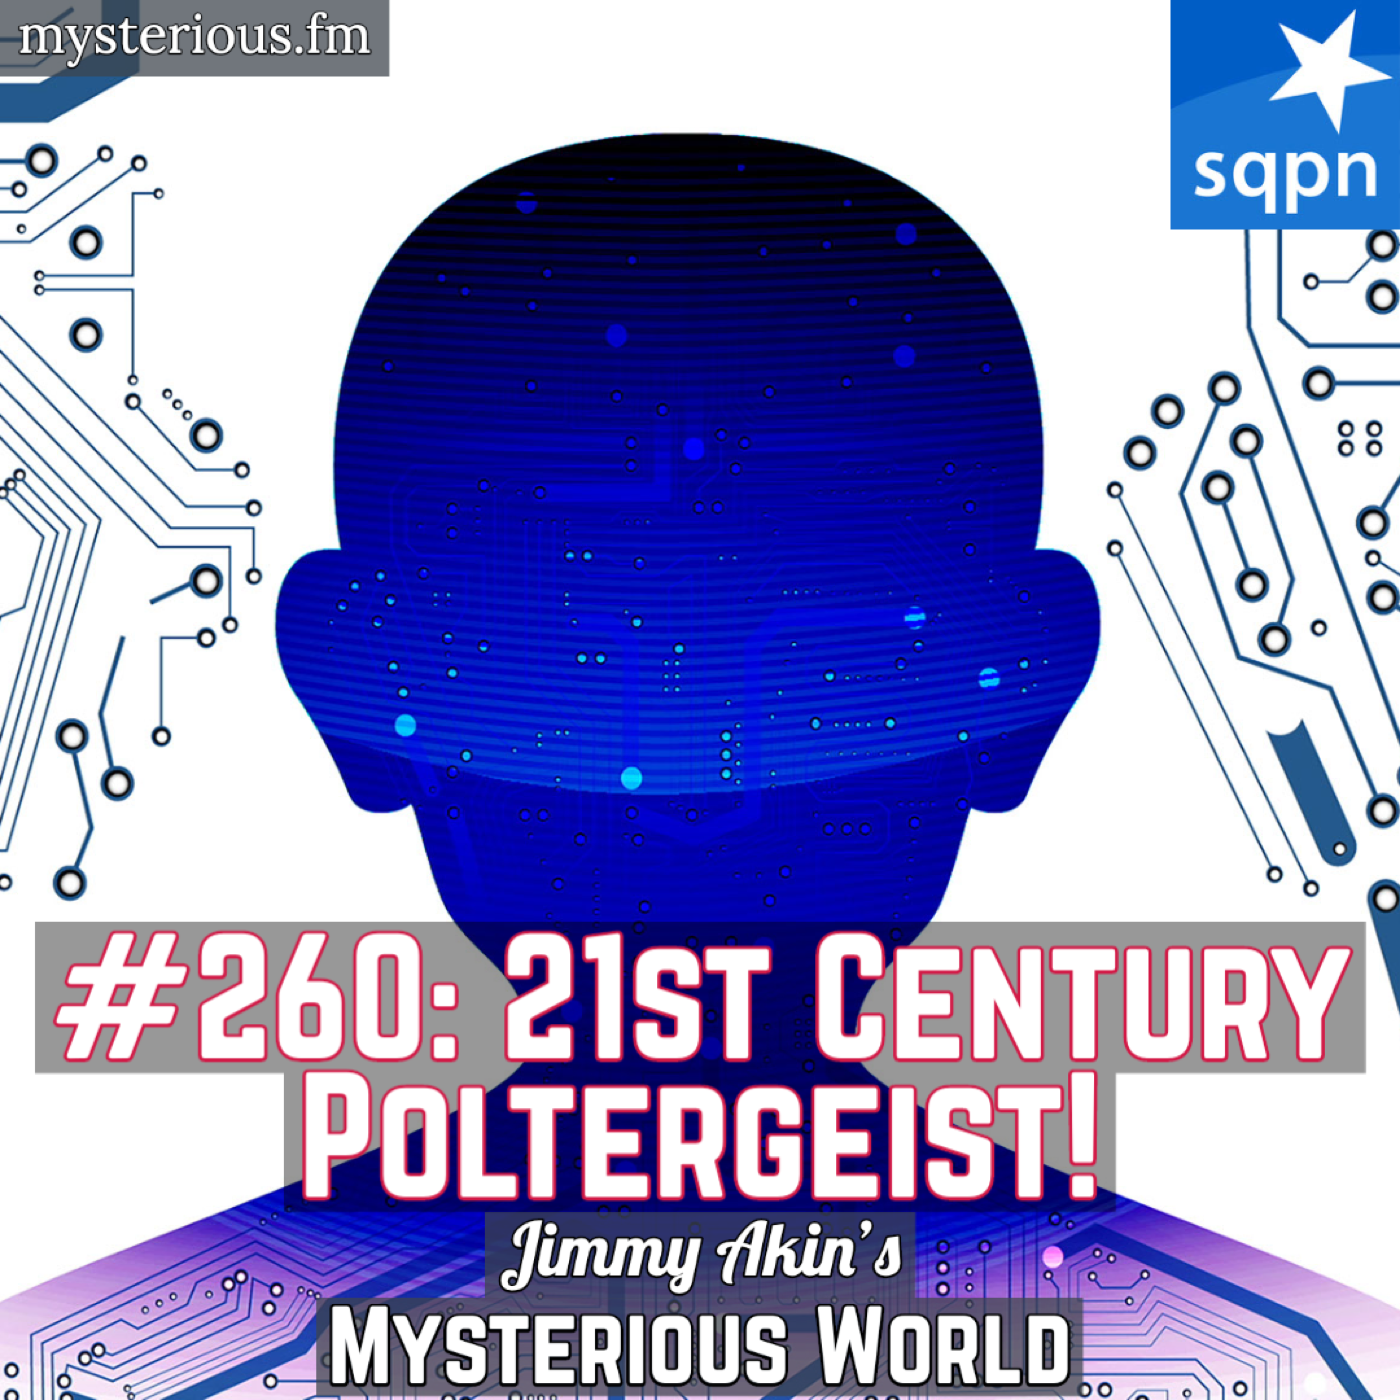 21st Century Poltergeist! (Psychokinesis? Telekinesis? Ghosts?)